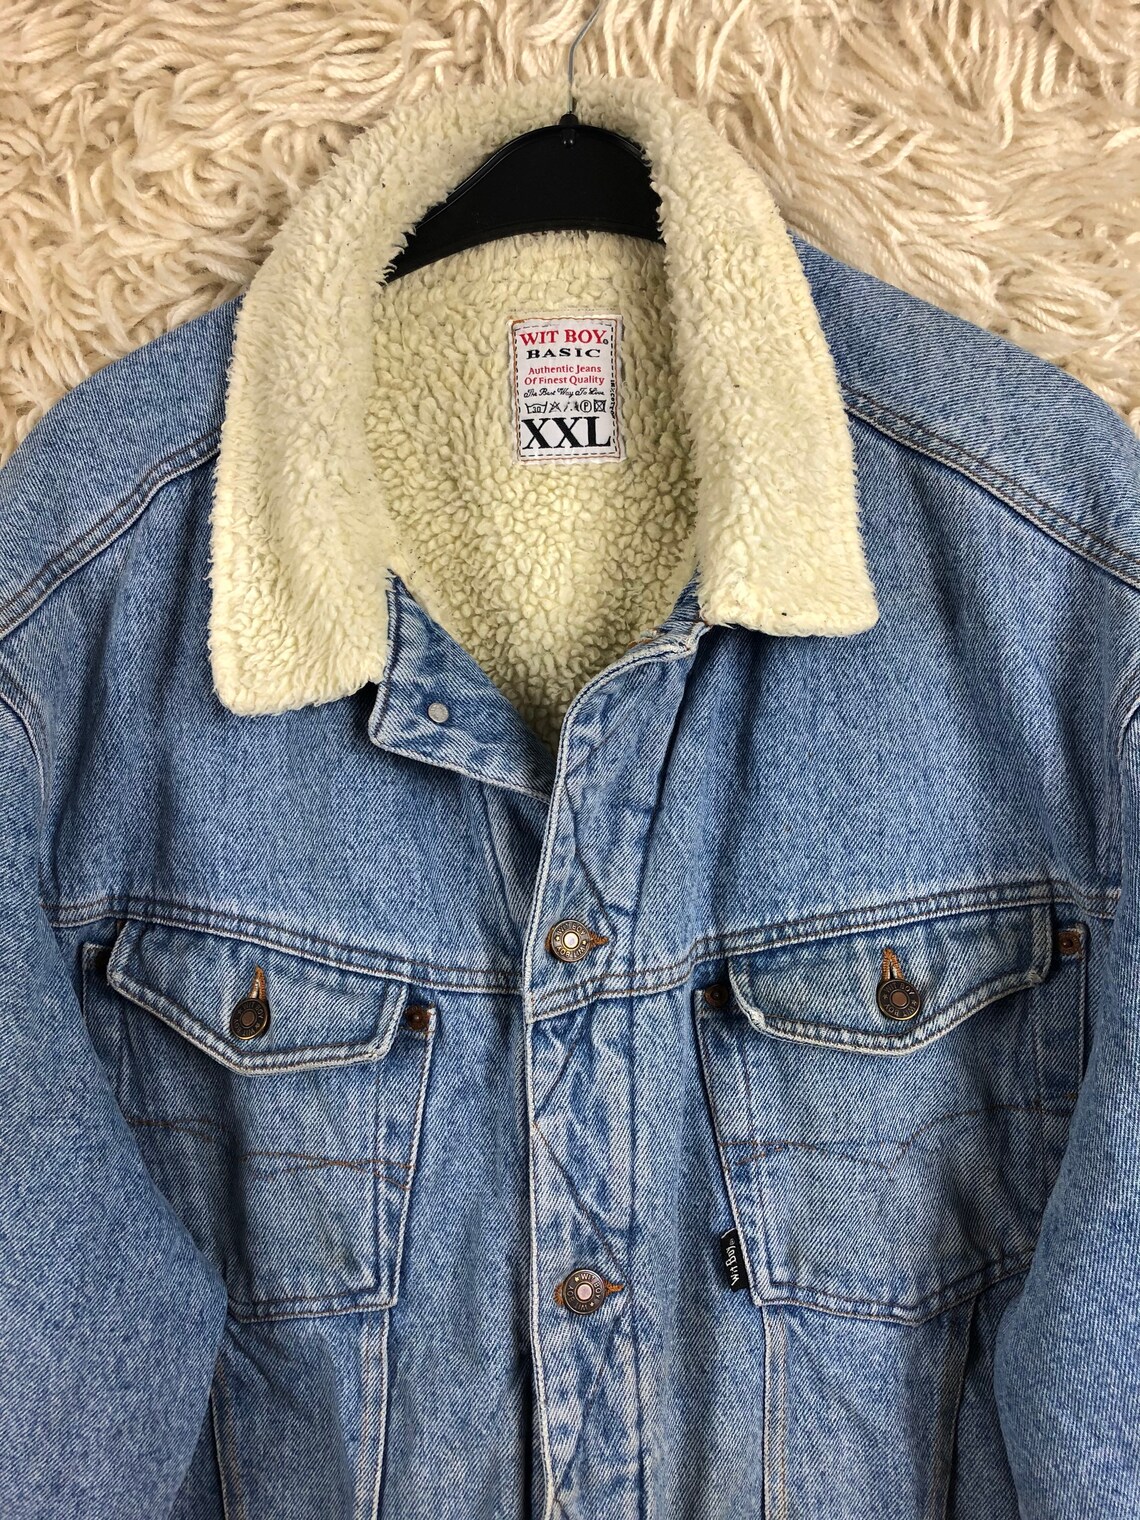 Vintage Wit Boy denim jacket with teddy fur 80s 90s lining | Etsy